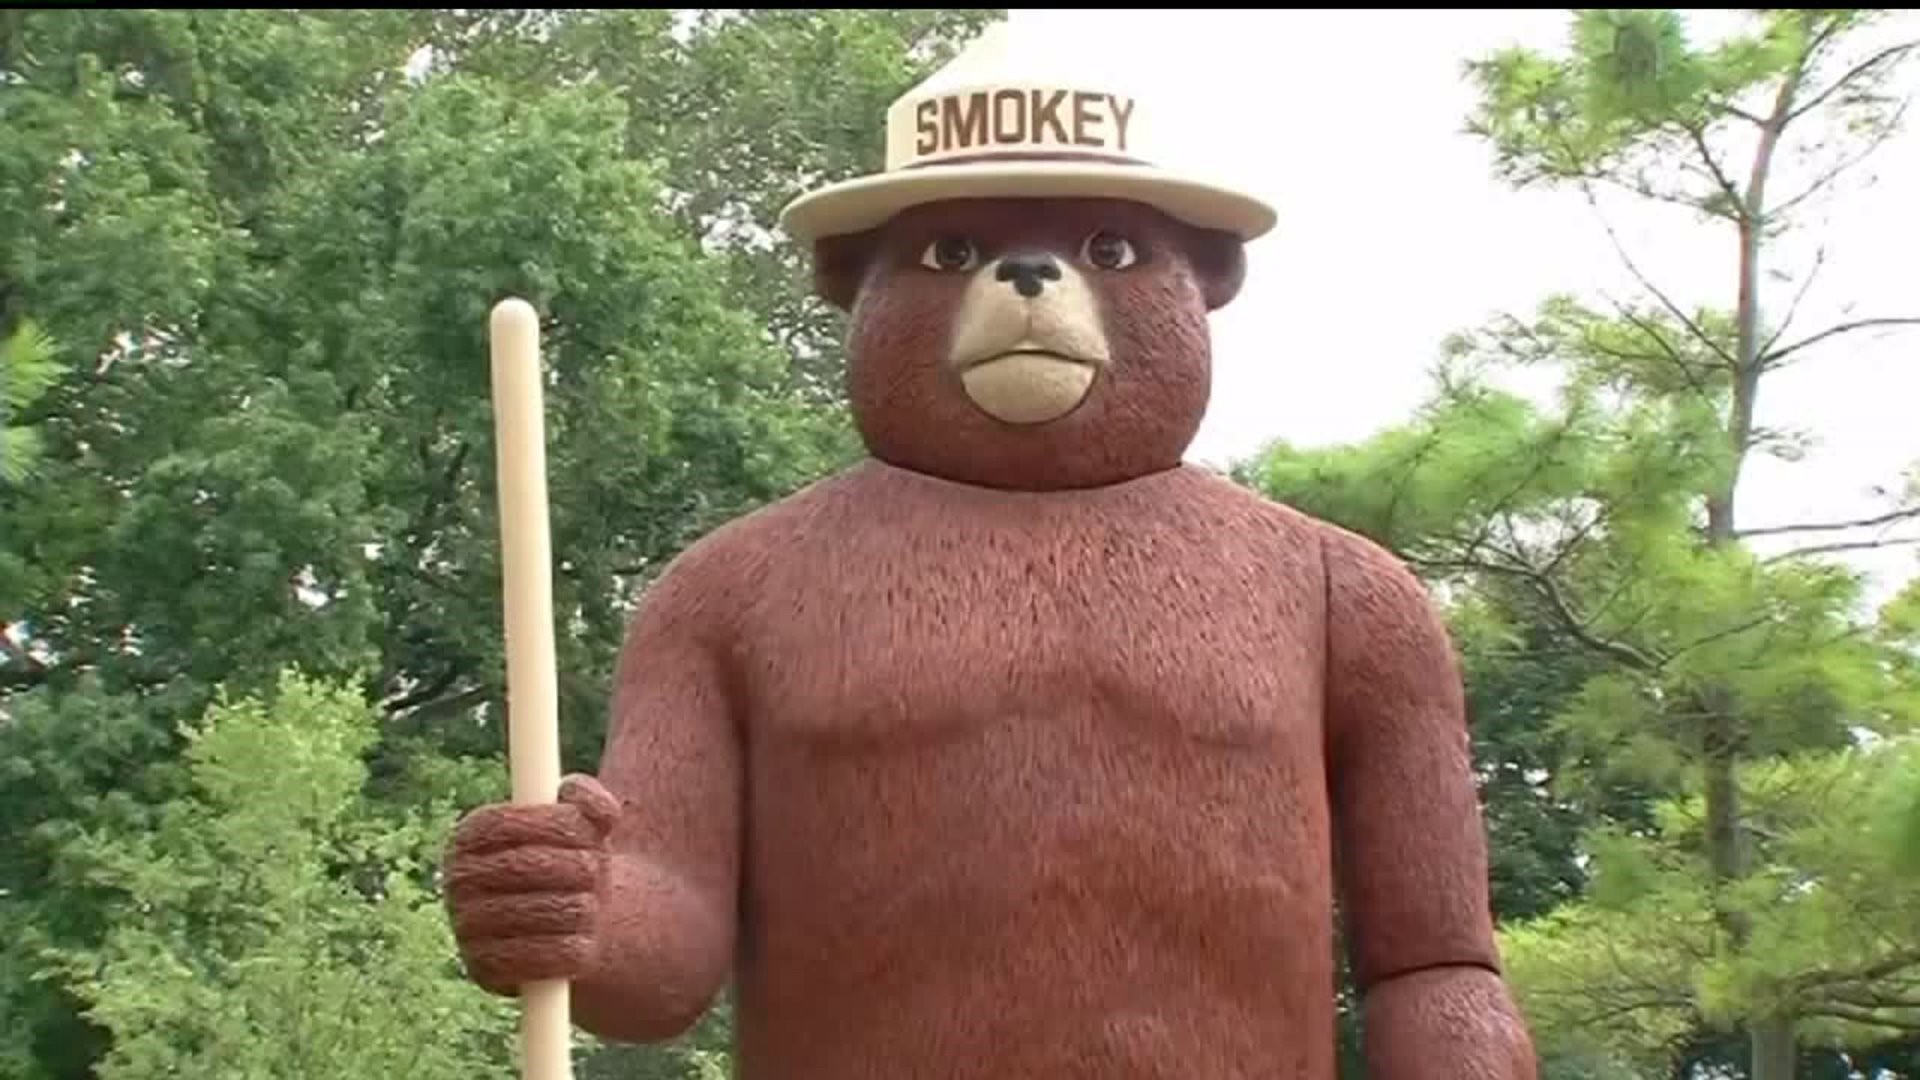 Smokey the bear turns 75